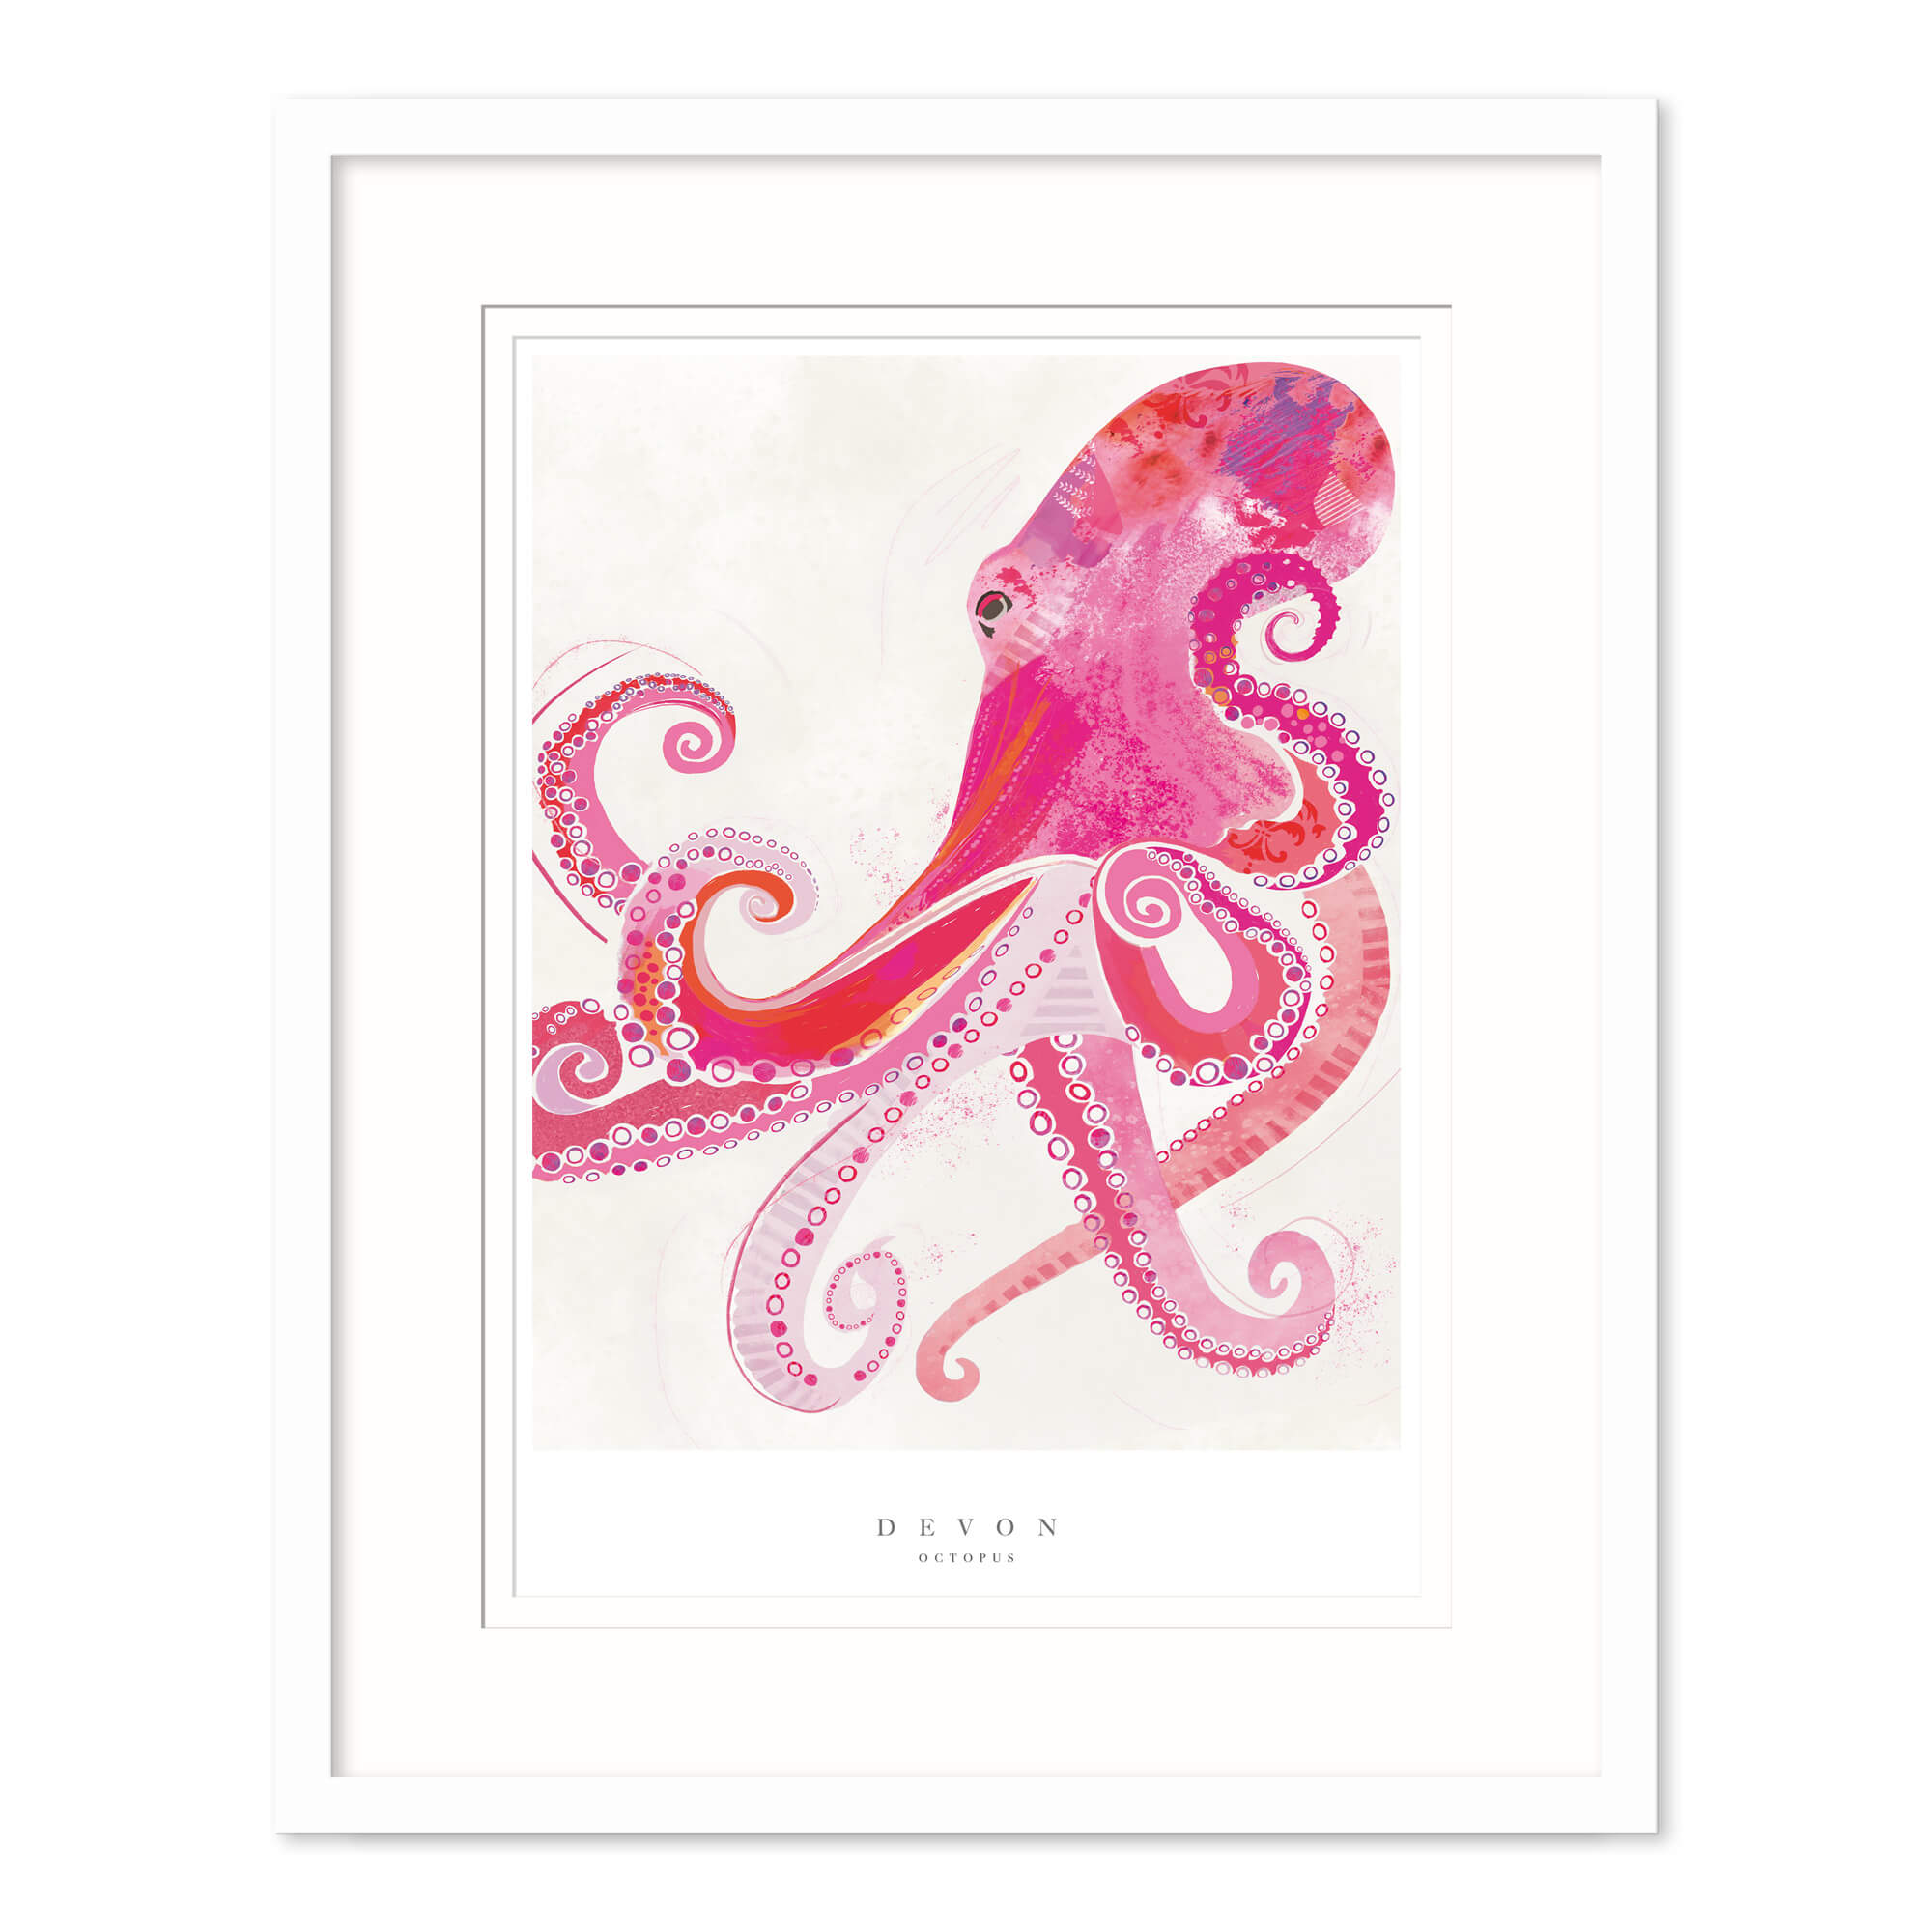 Devon Octopus Framed Print